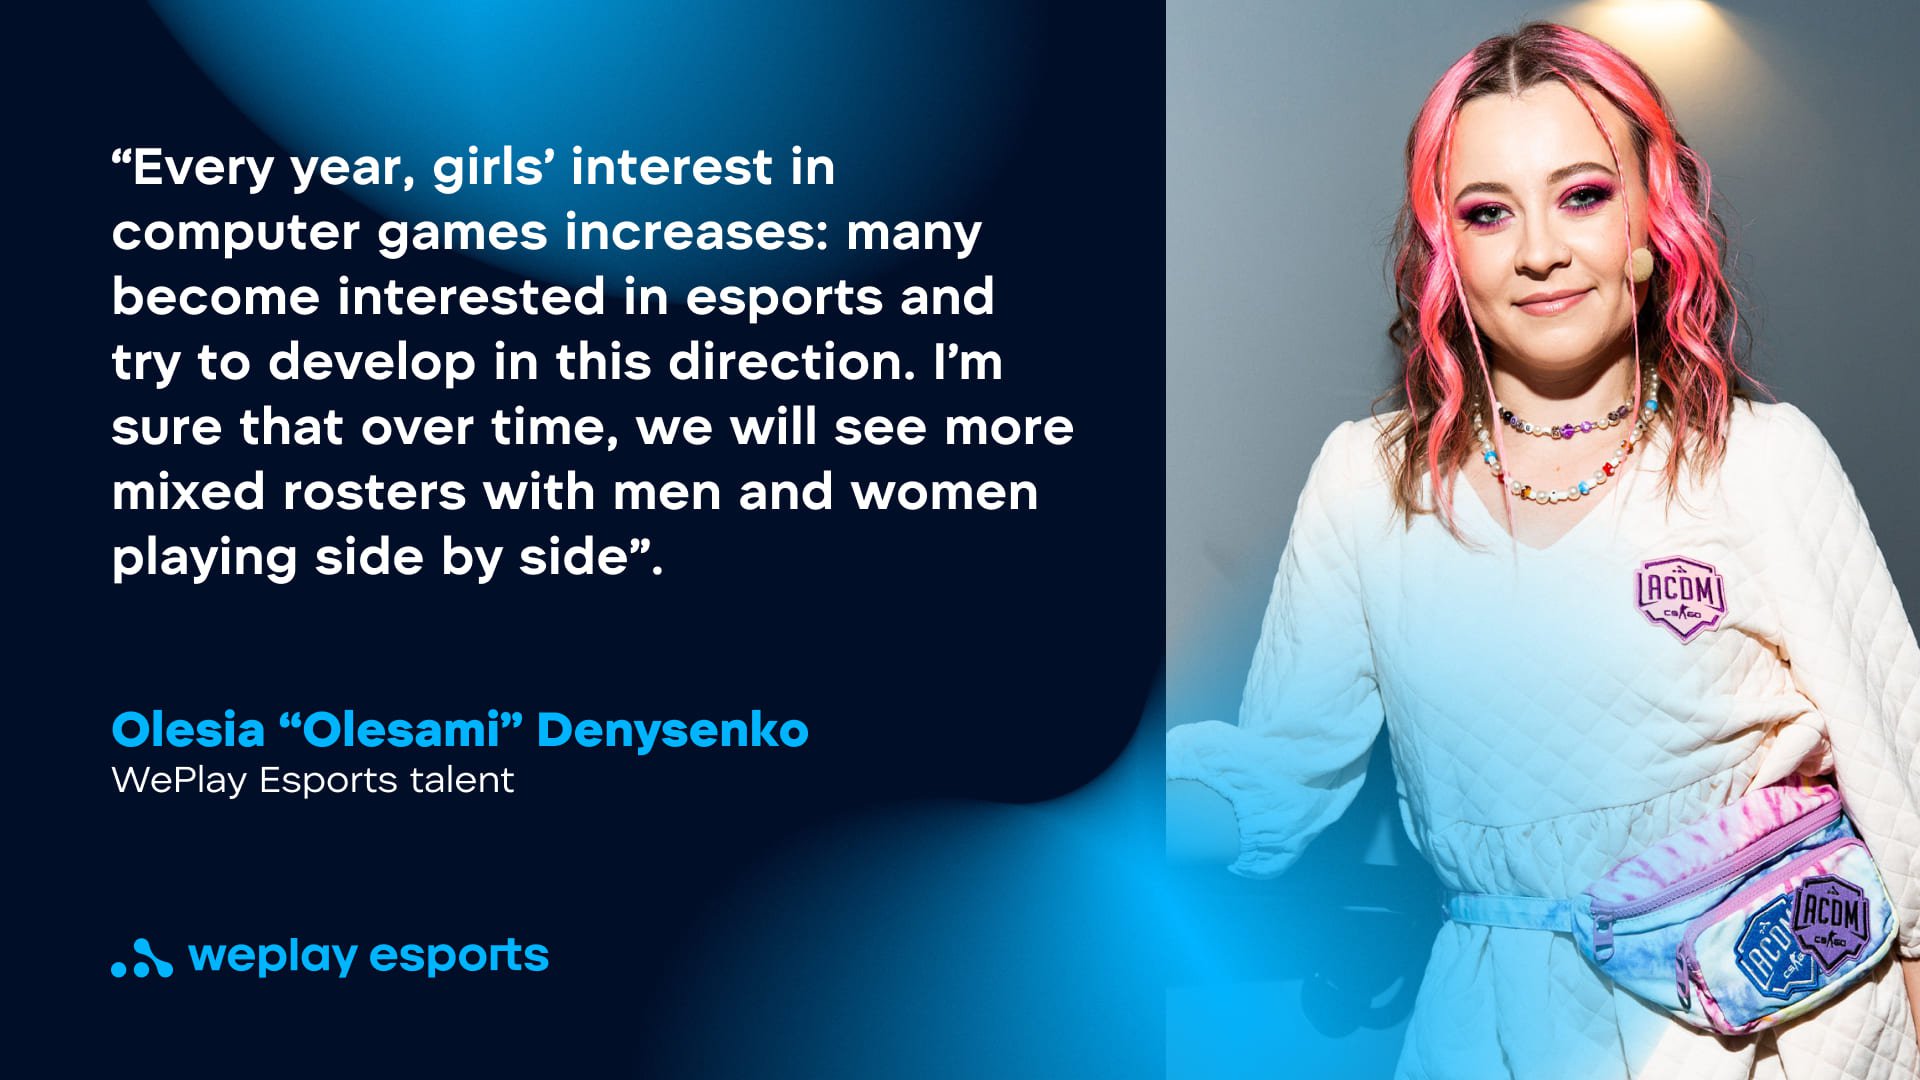 Olesia “Olesami” Denysenko, WePlay Esports talent. Credit: WePlay Holding